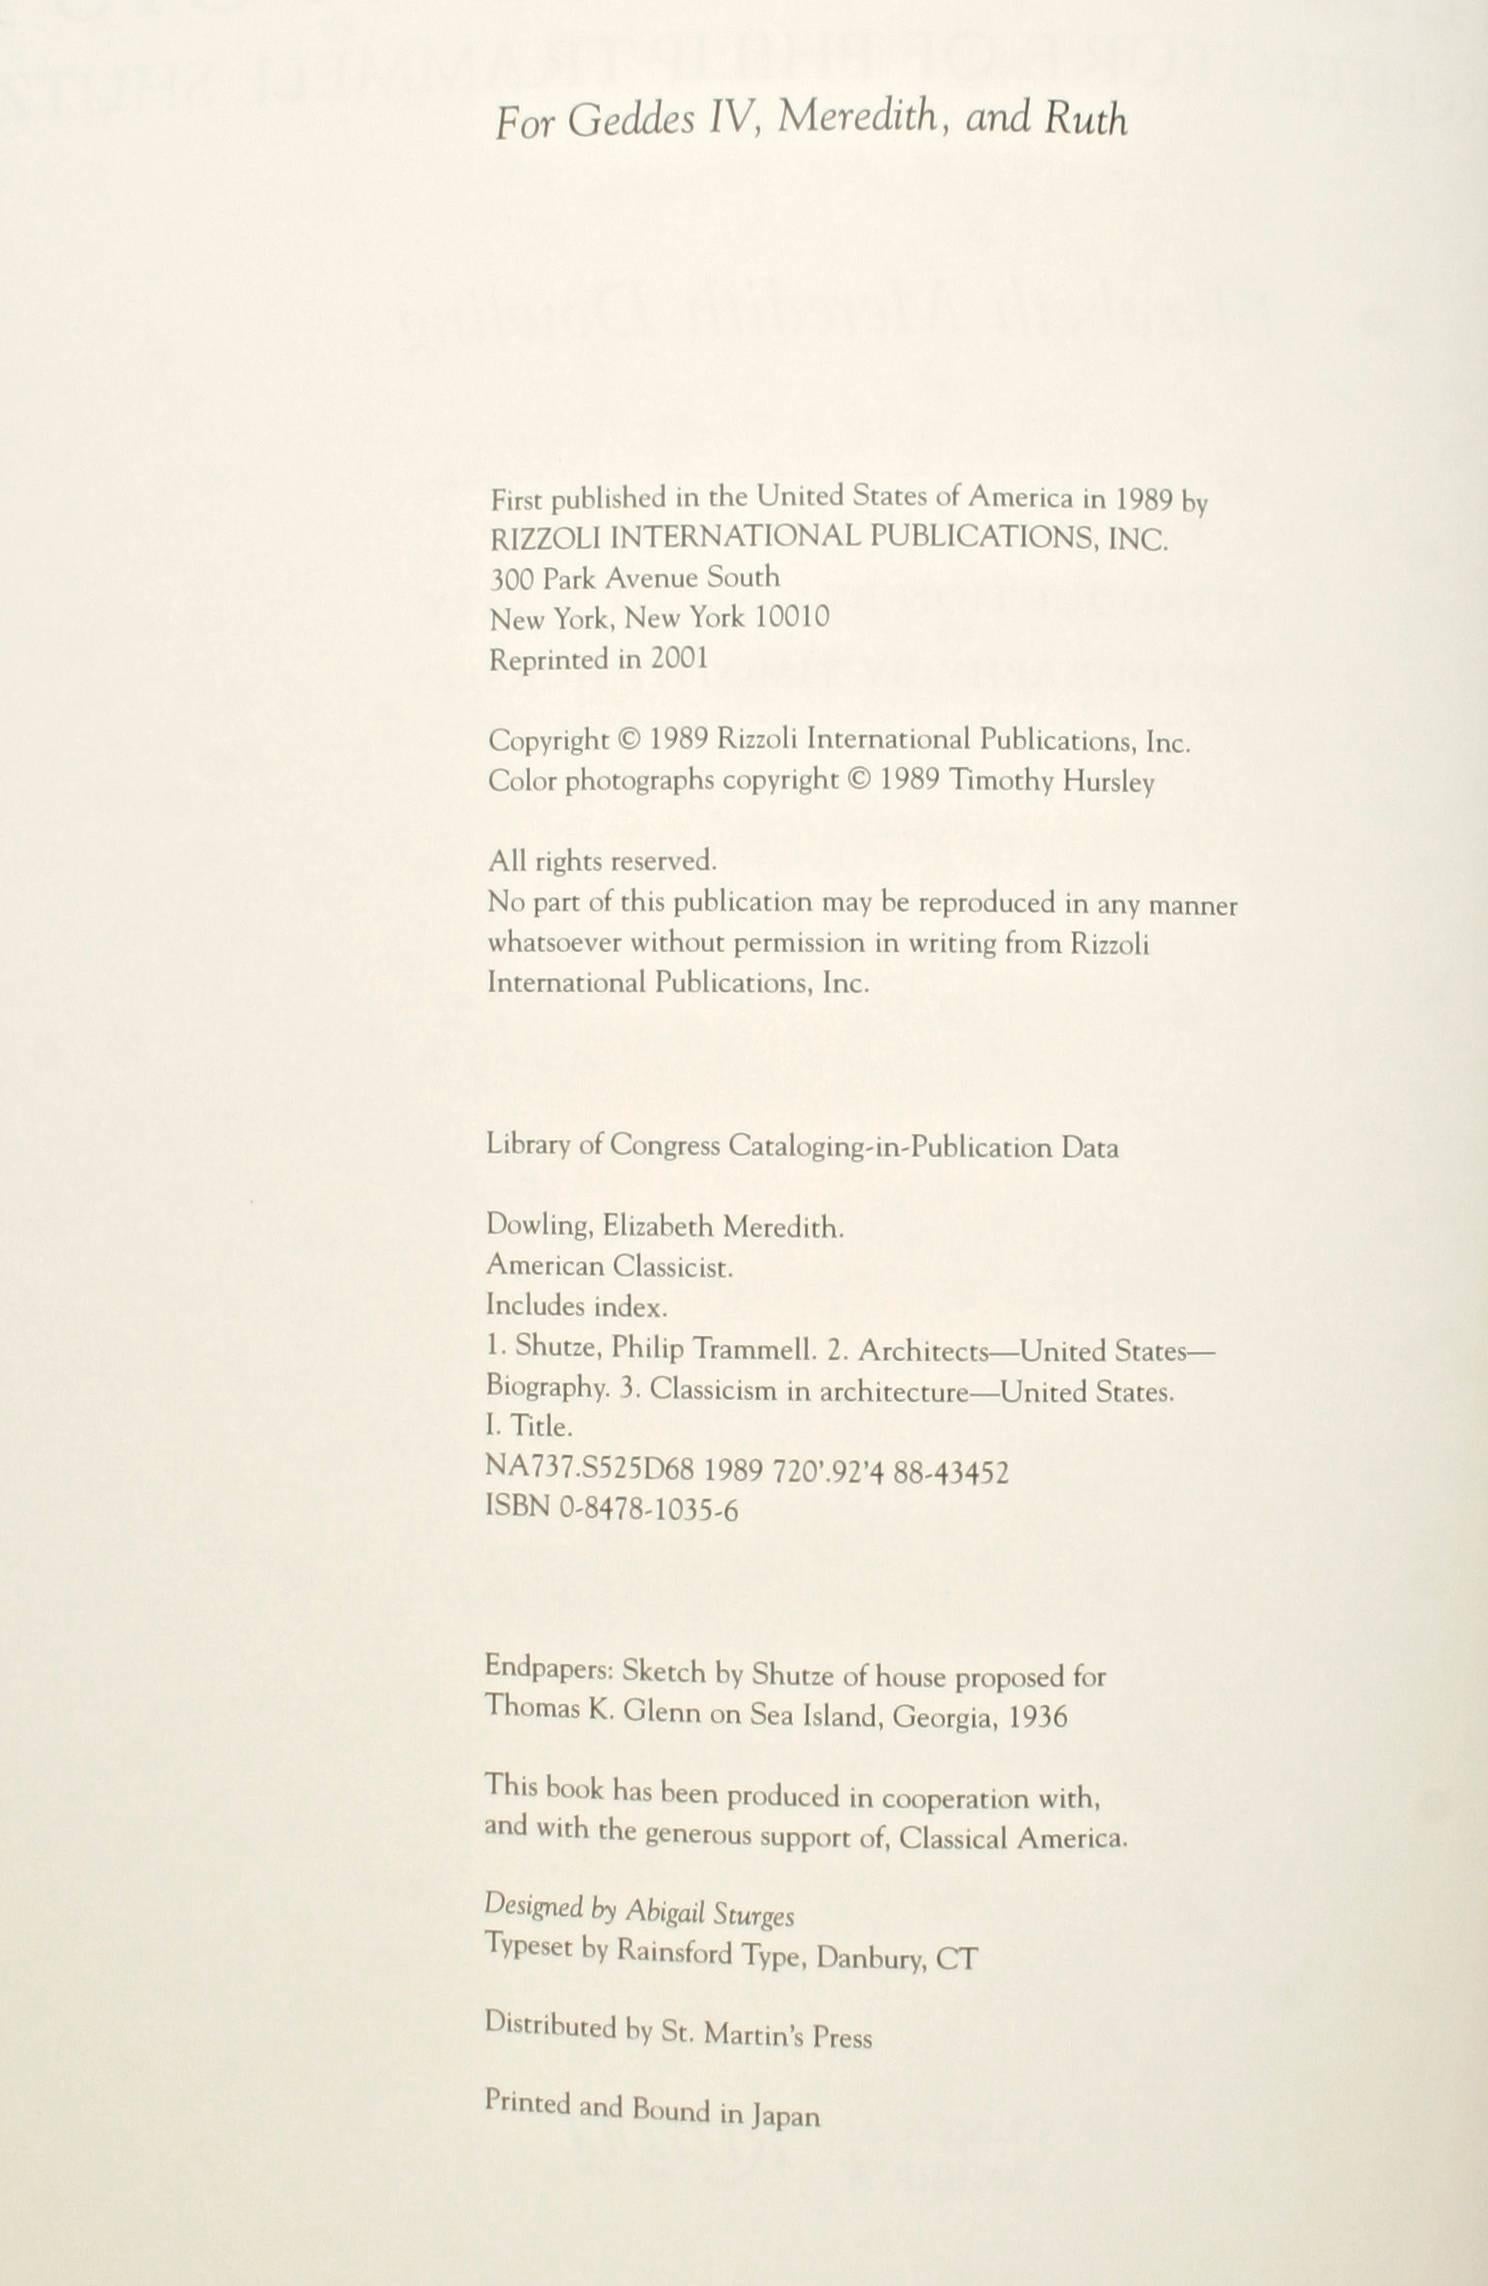 American Classicist, the Architecture of Philip Shutze by Elizabeth Dowling 5